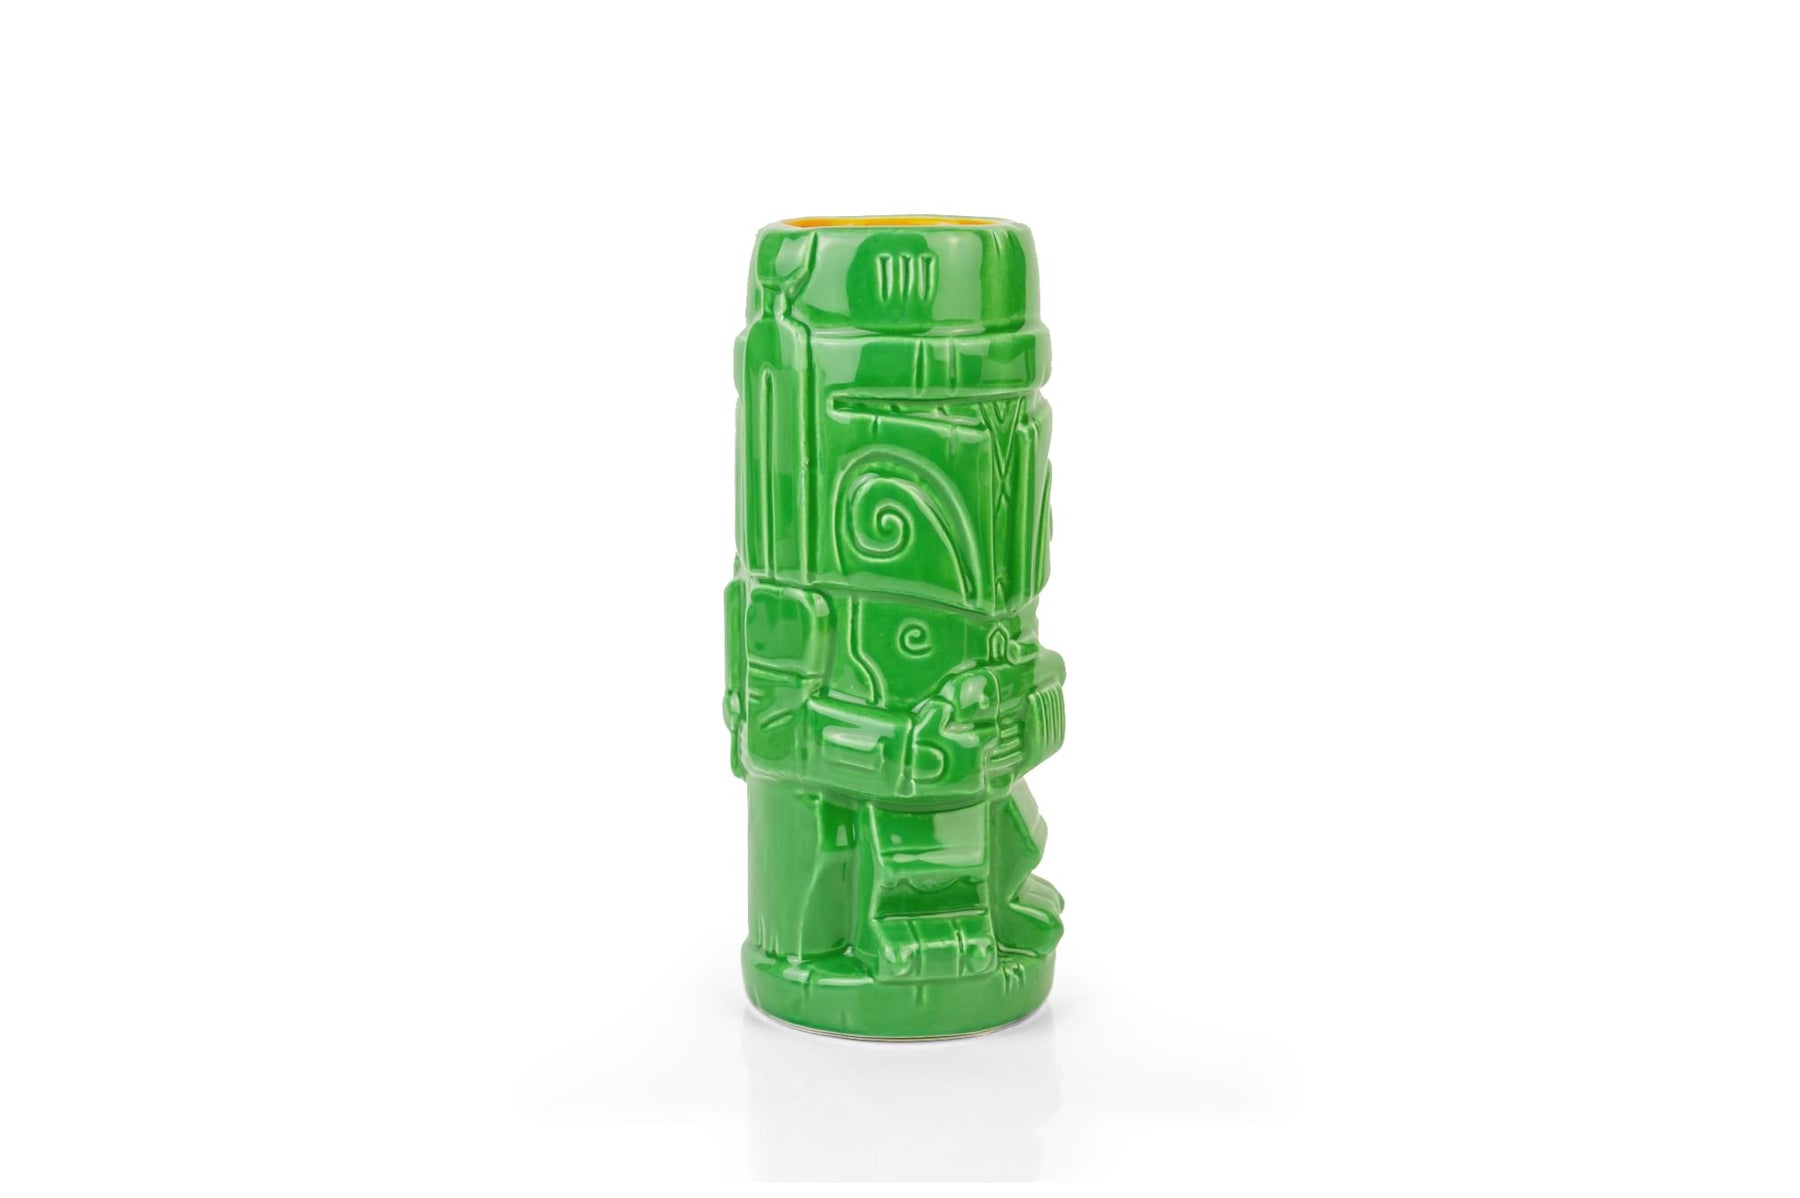 Geeki Tikis Star Wars Boba Fett Mug | Ceramic Tiki Style Cup | Holds 13 Ounces